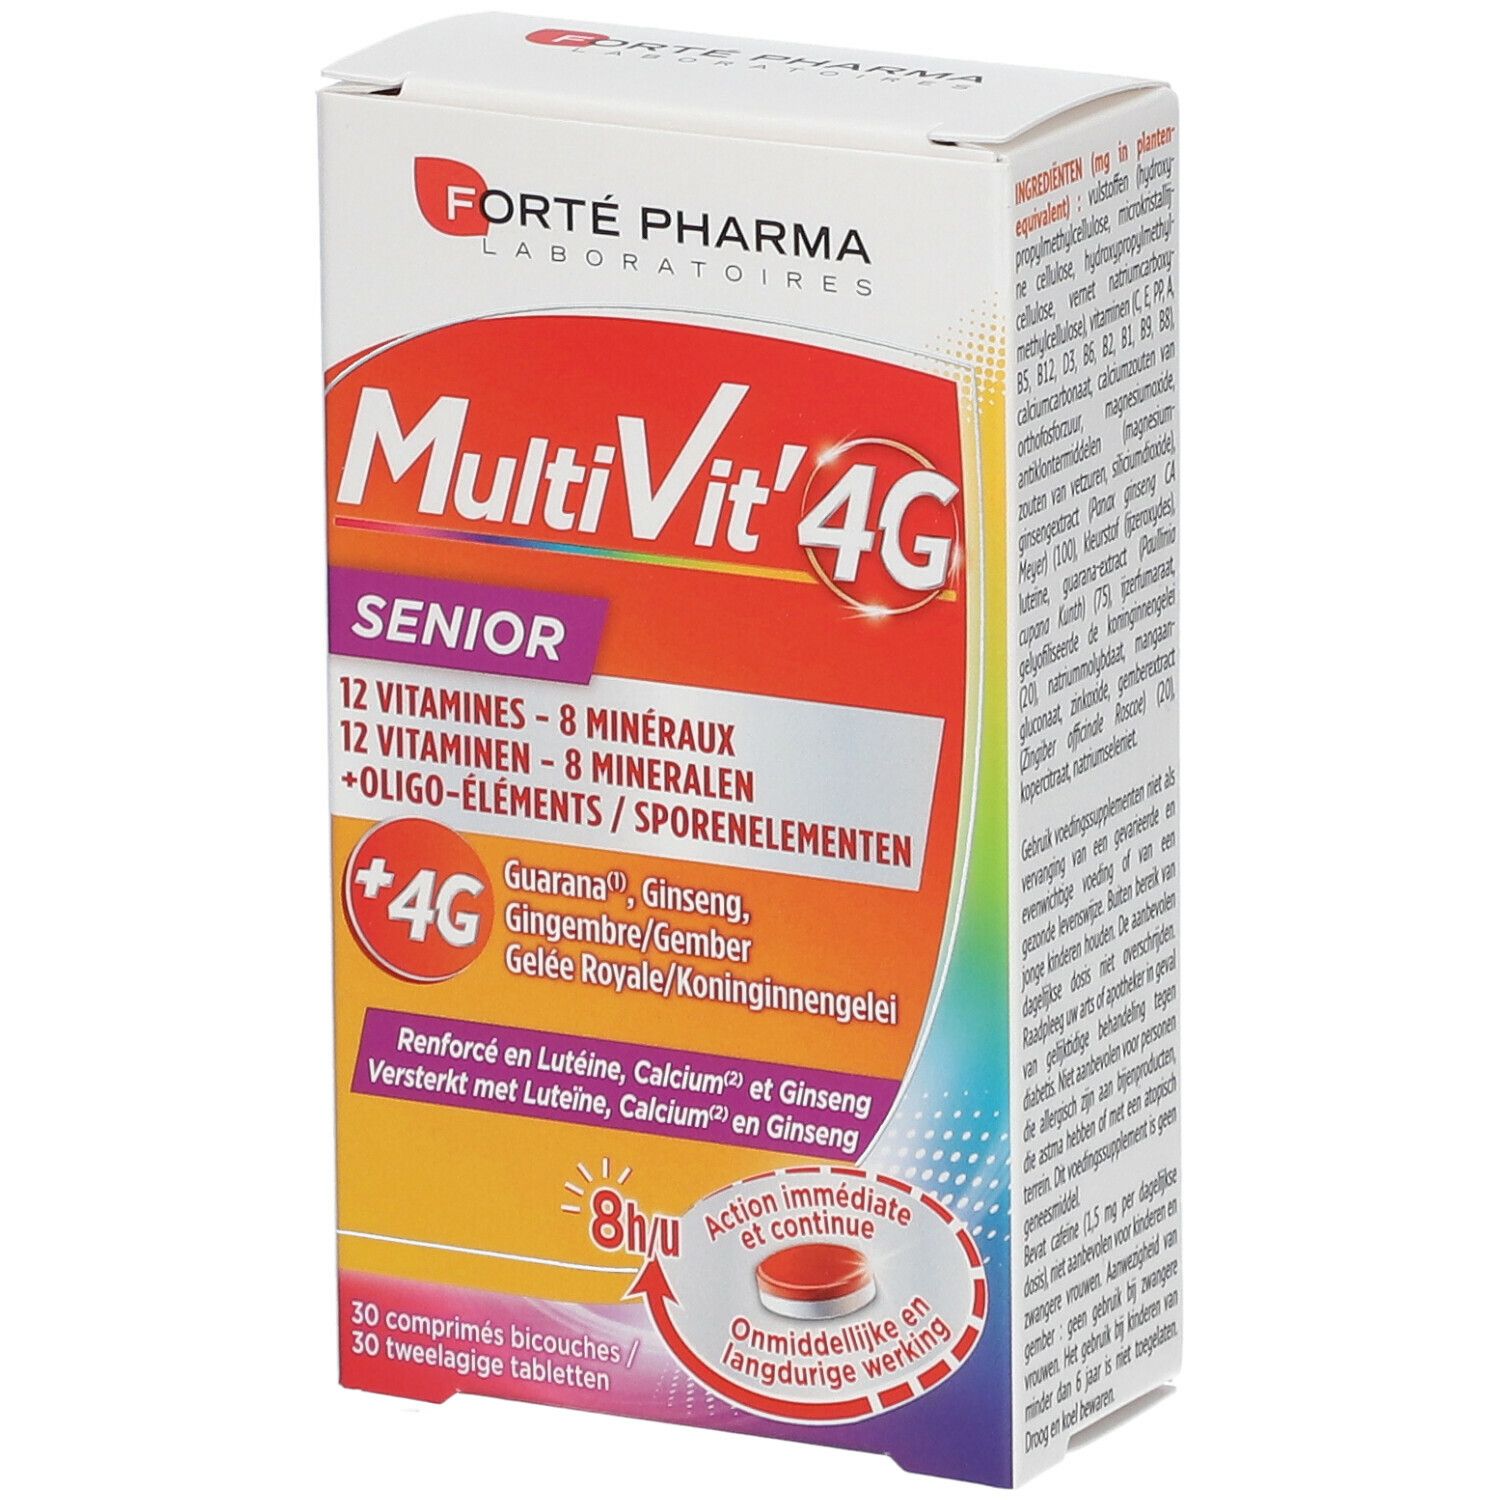 Forte Pharma Multivit 4G Sénior